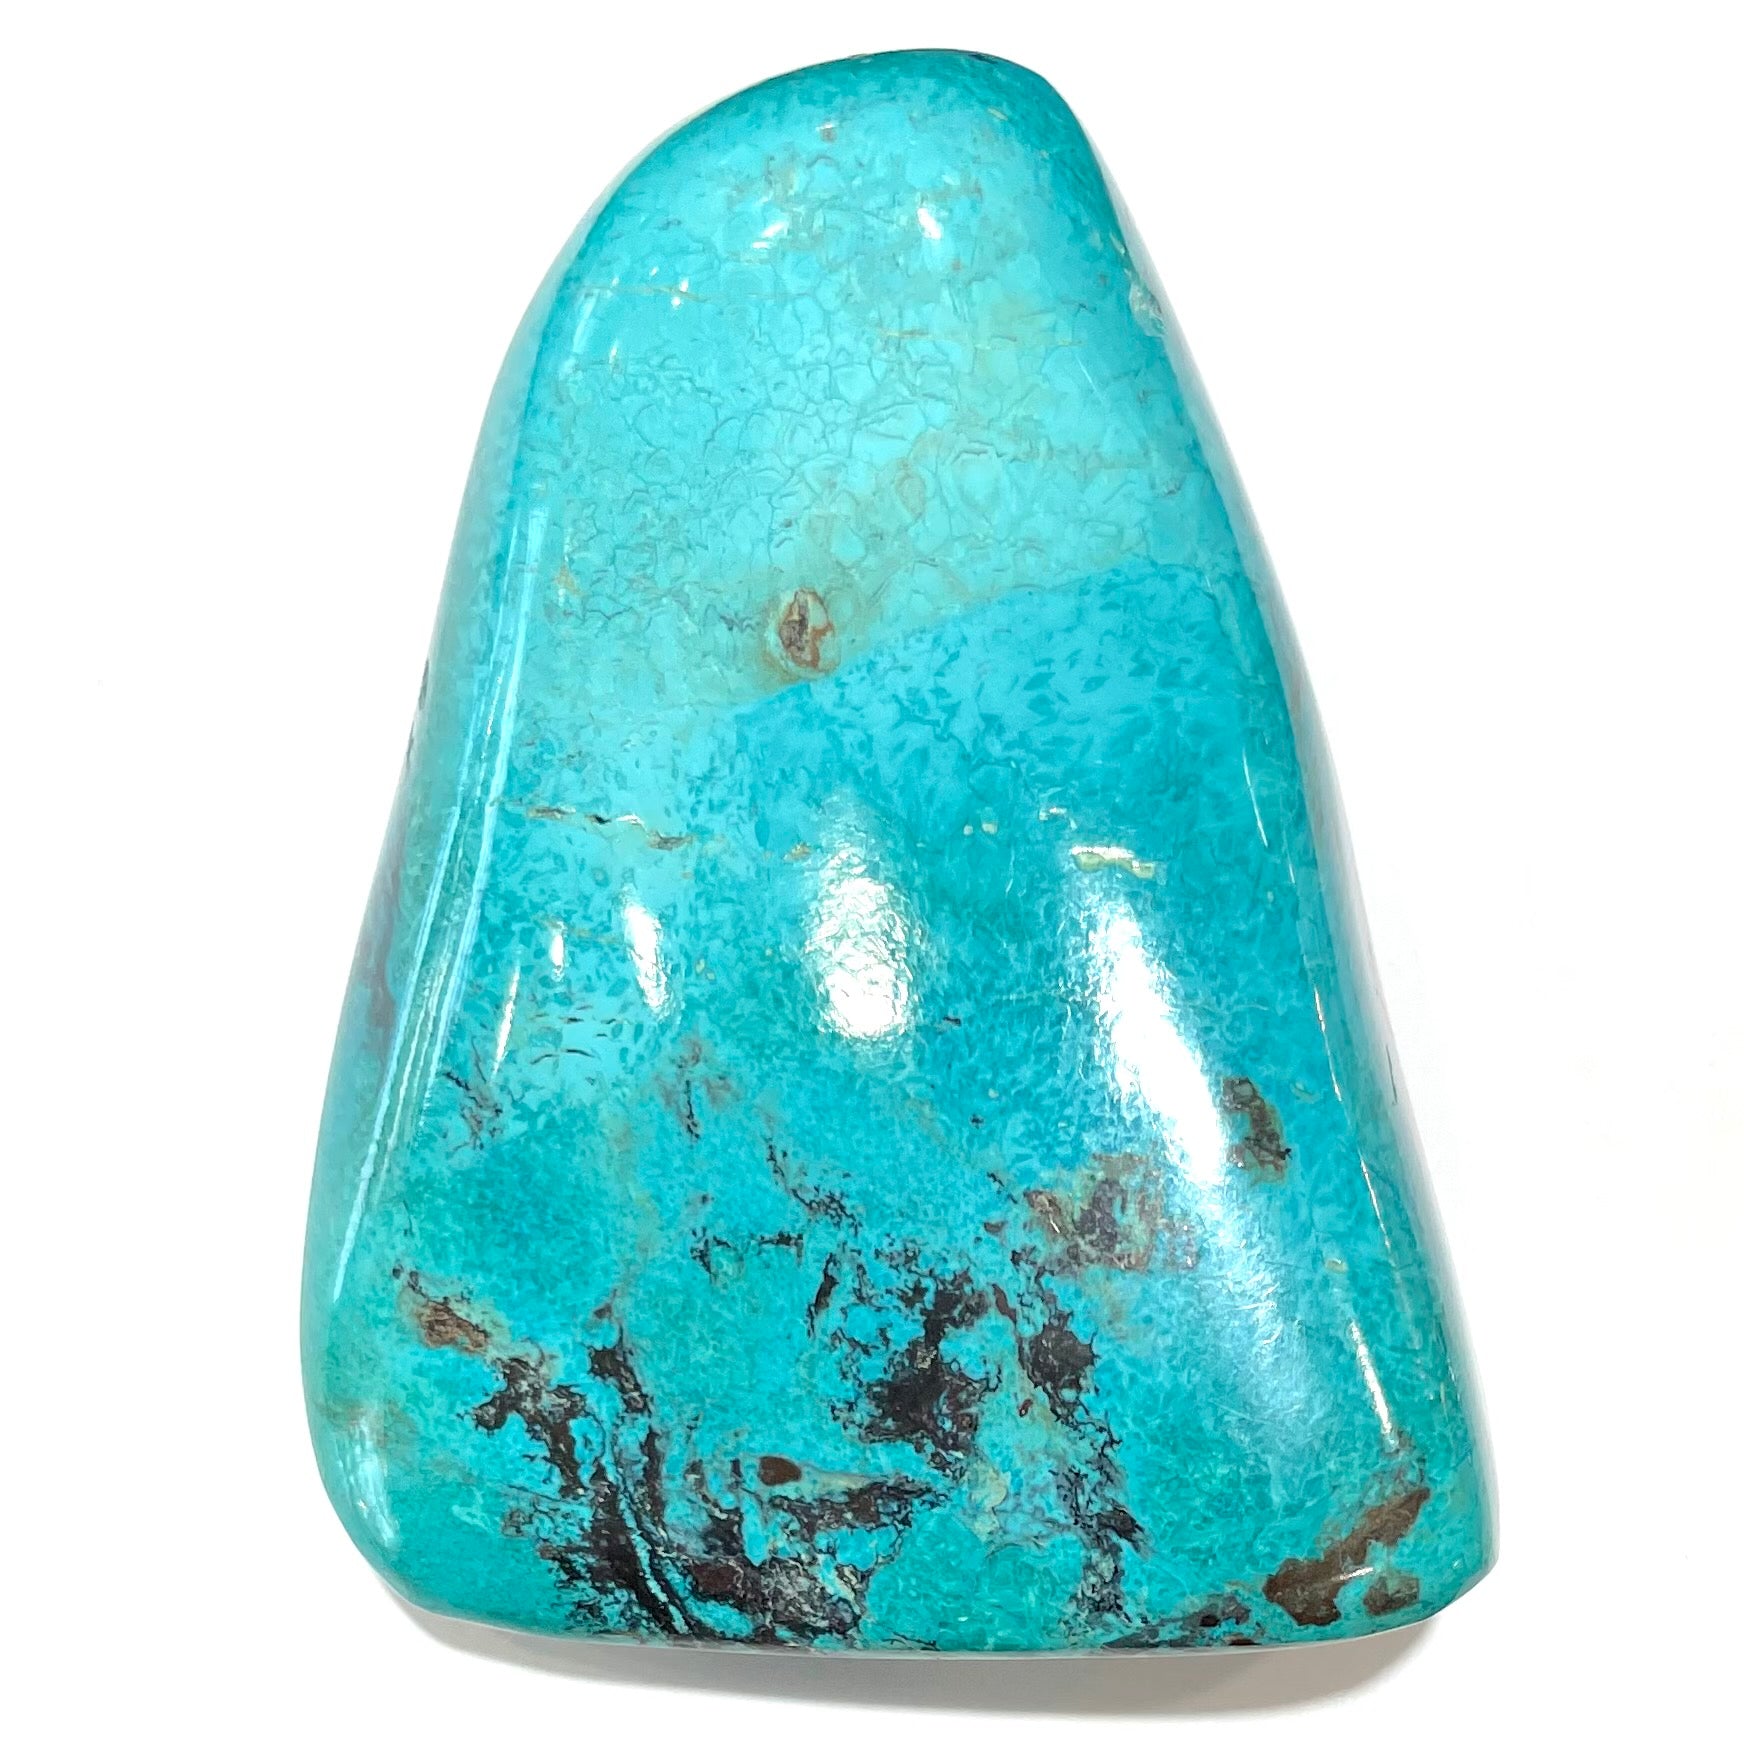 An exceptionally large, freeform shaped, polished turquoise specimen from Morenci, Arizona.